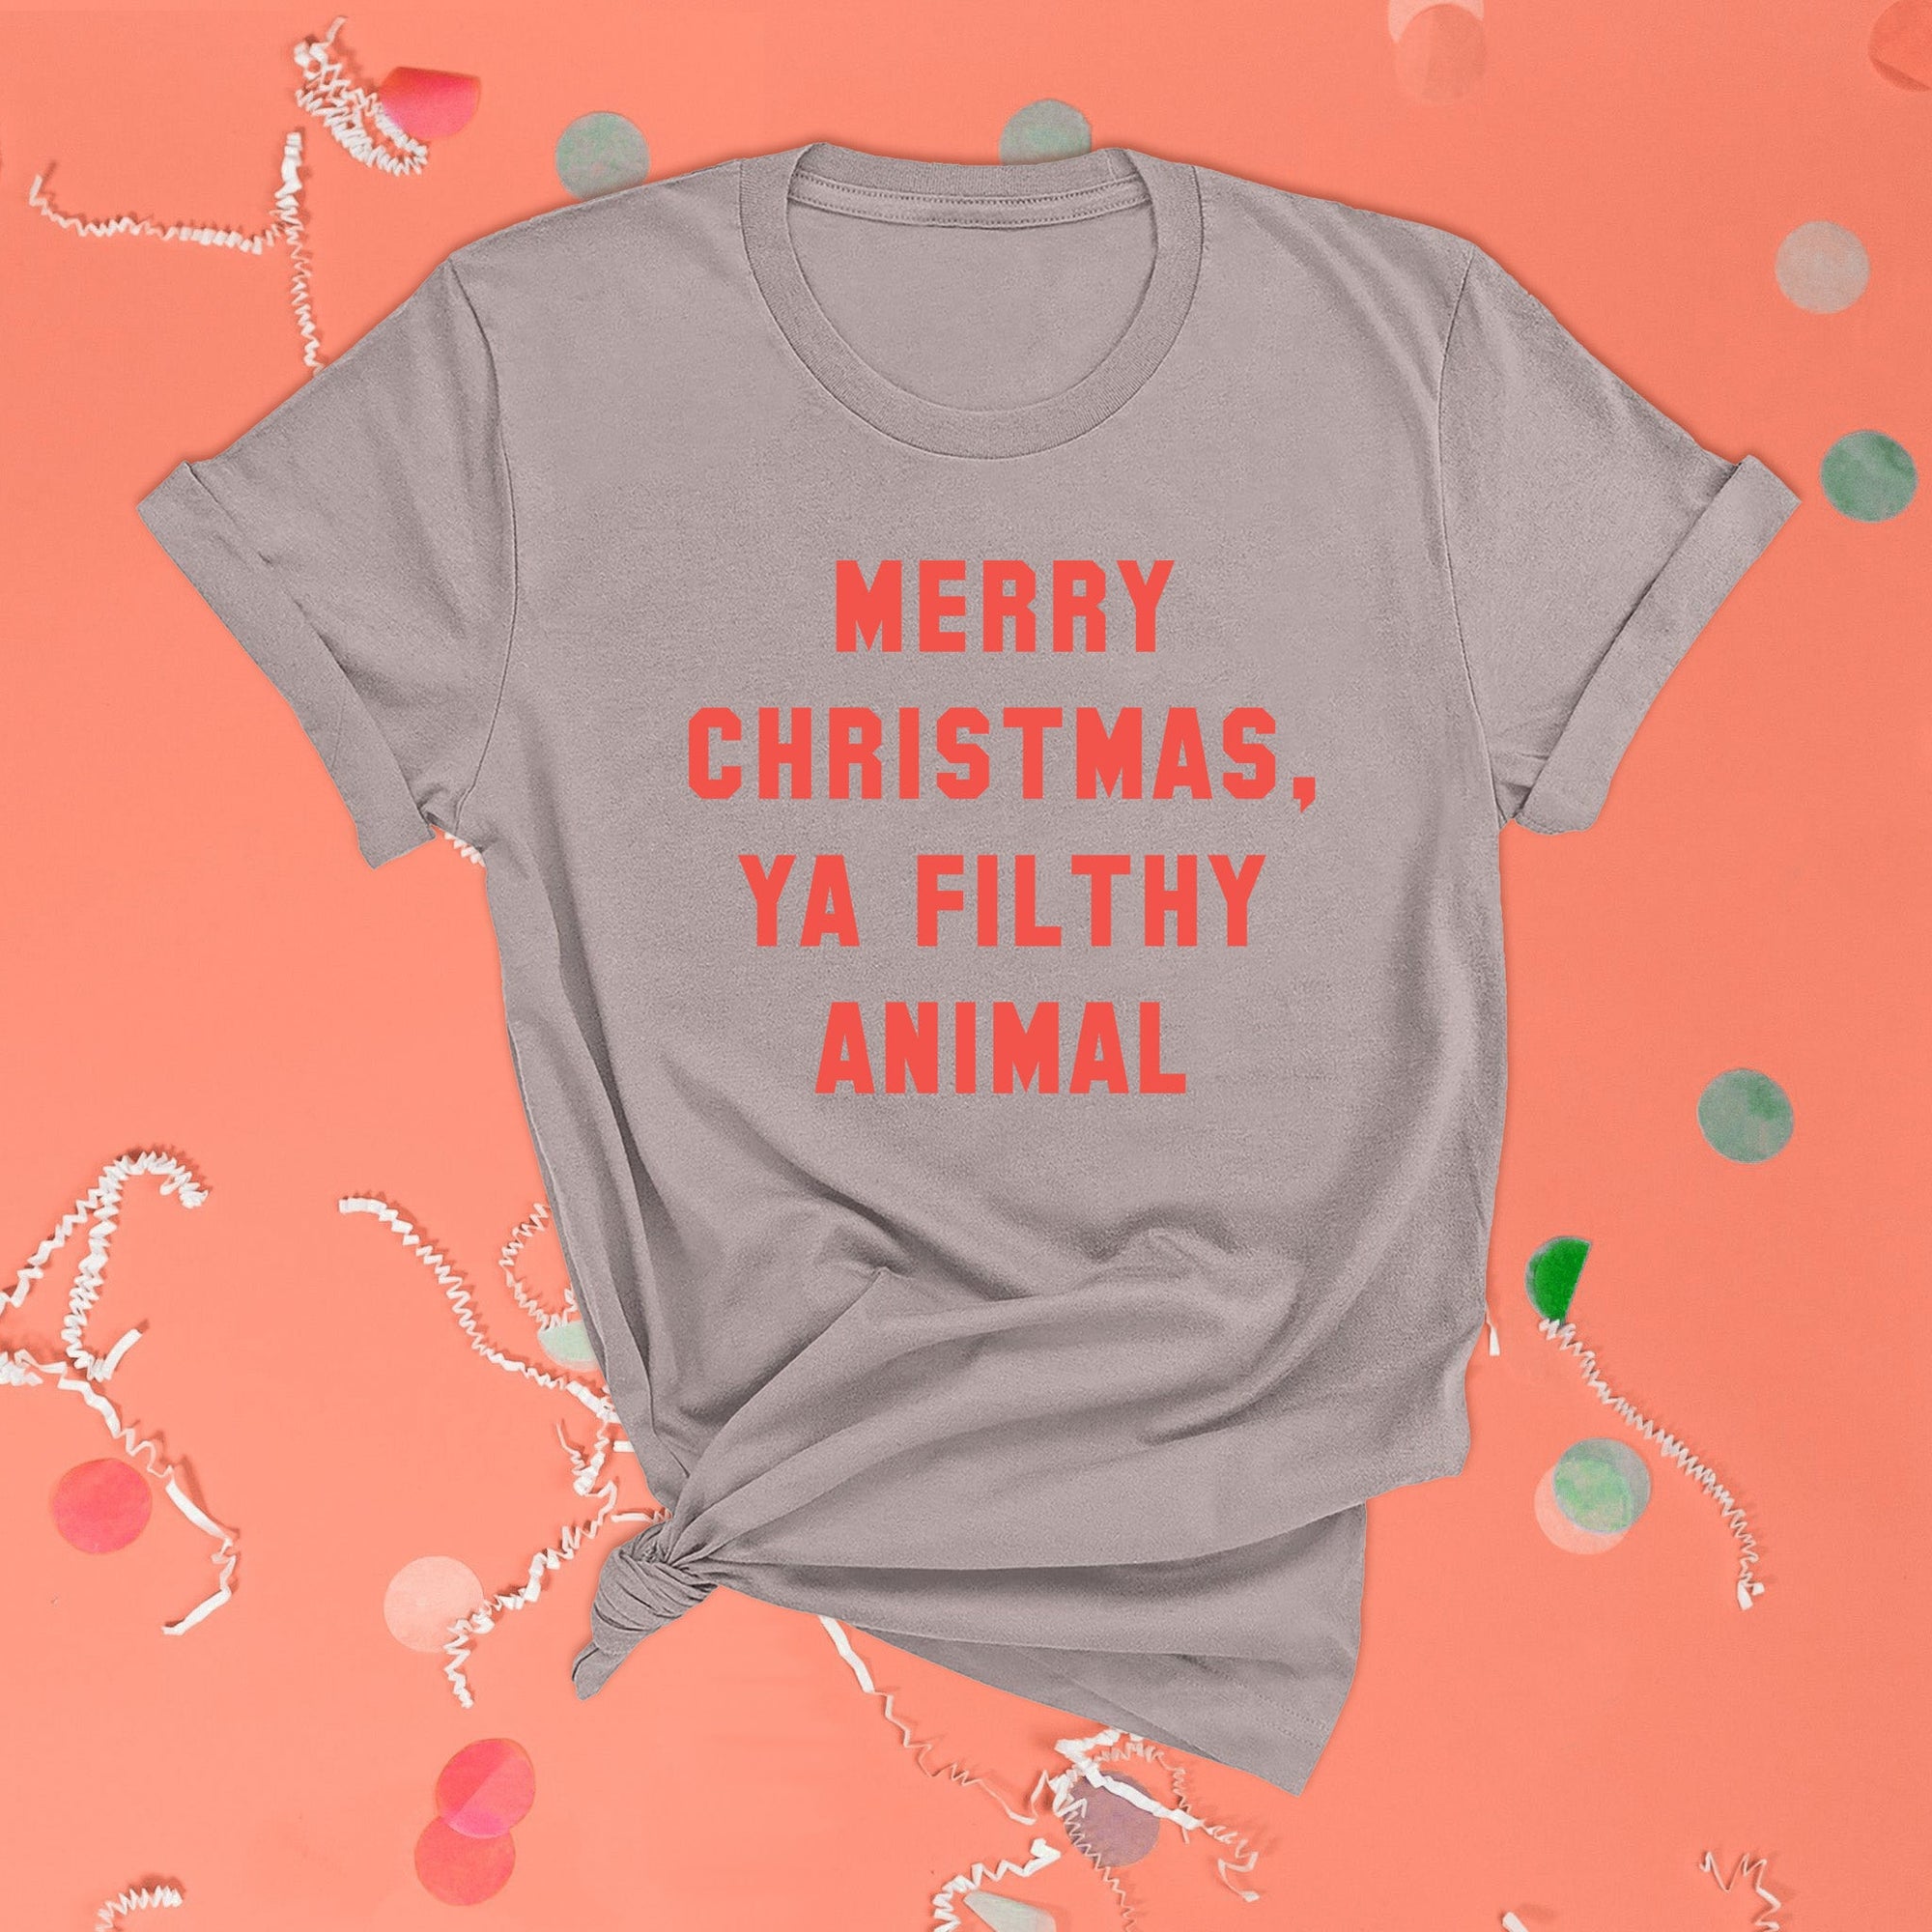 Merry Christmas, Ya Filthy Animal Home Alone Inspired T-Shirt